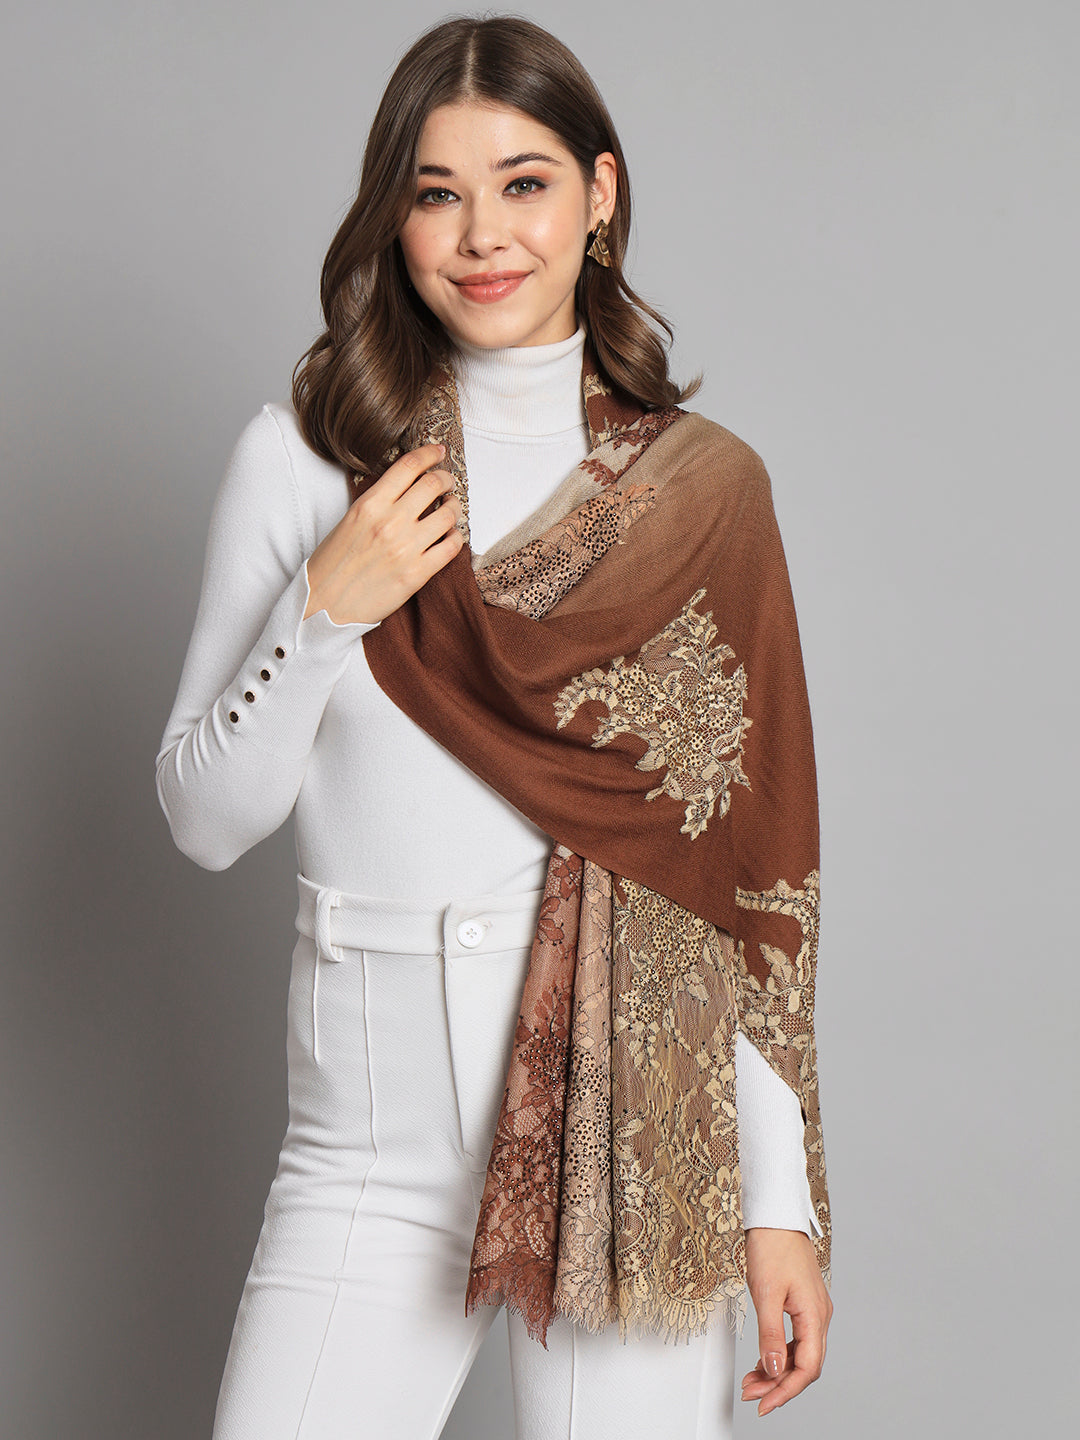 lace shawl, woolen shawls, bridesmaid gifts